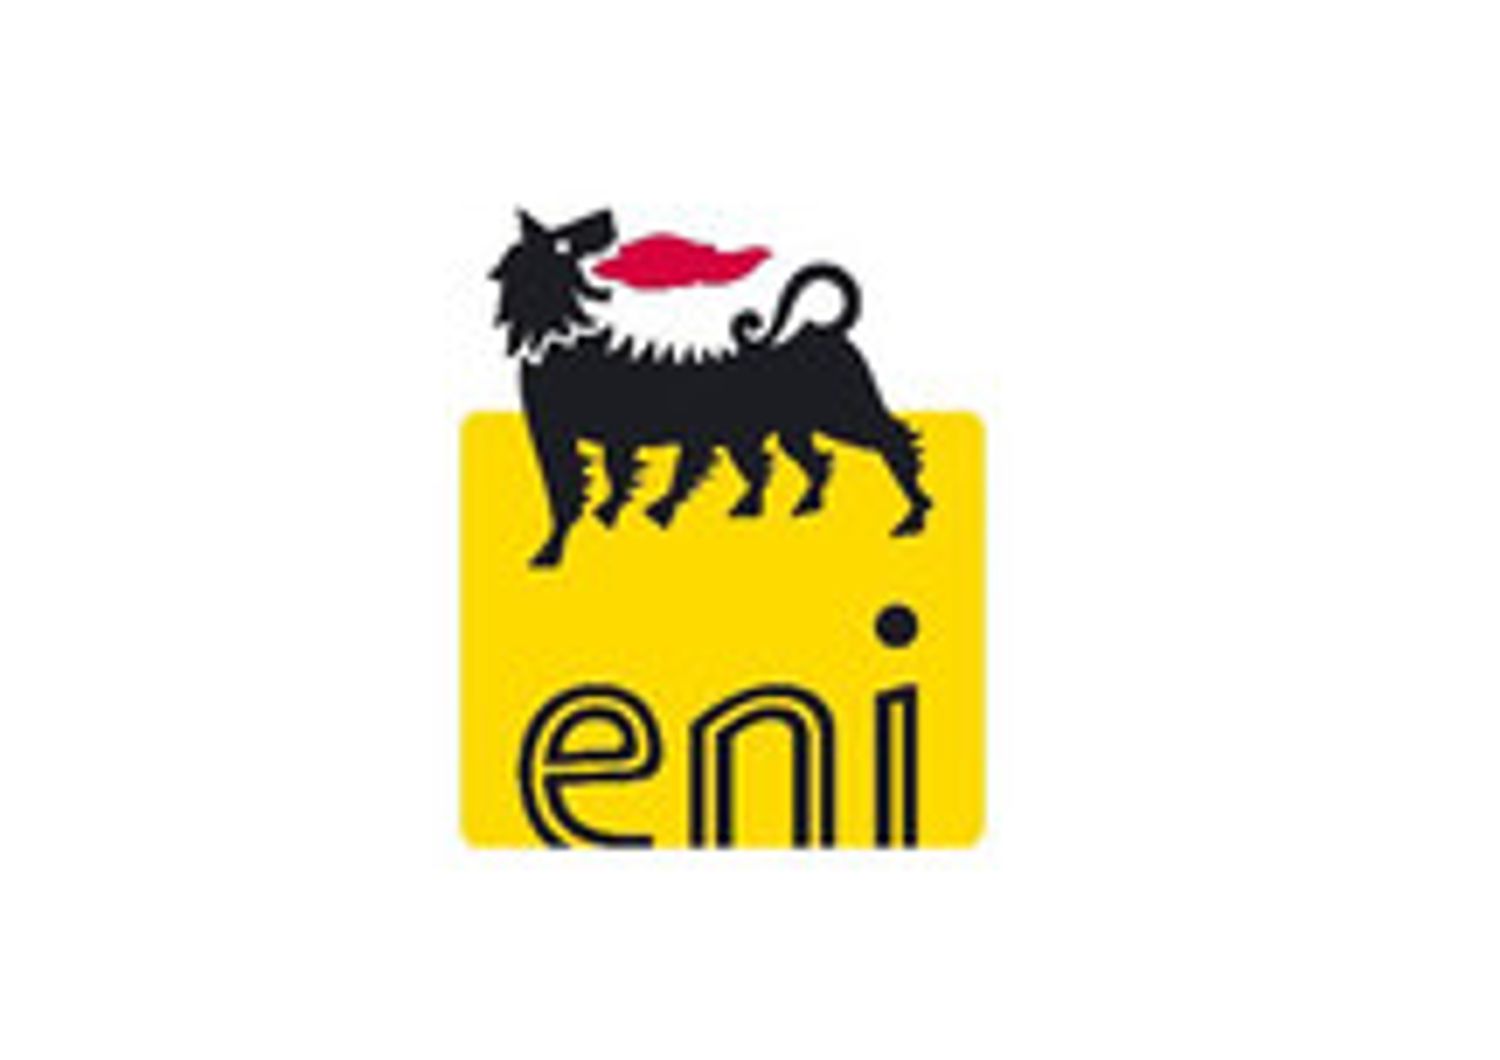 Logo Eni